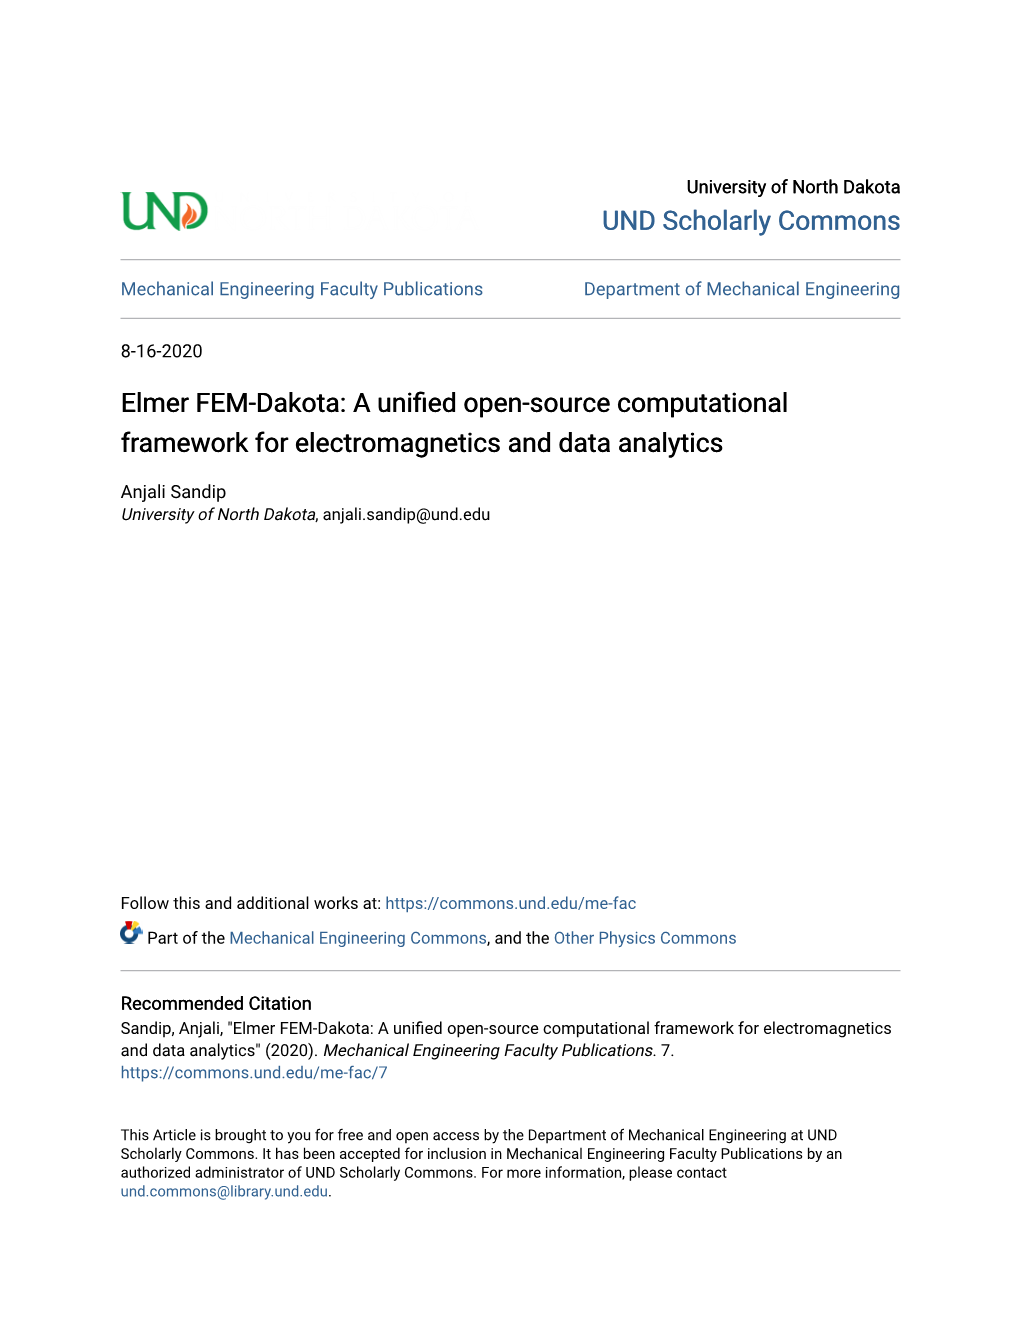 Elmer FEM-Dakota: a Unified Open-Source Computational Framework for Electromagnetics and Data Analytics